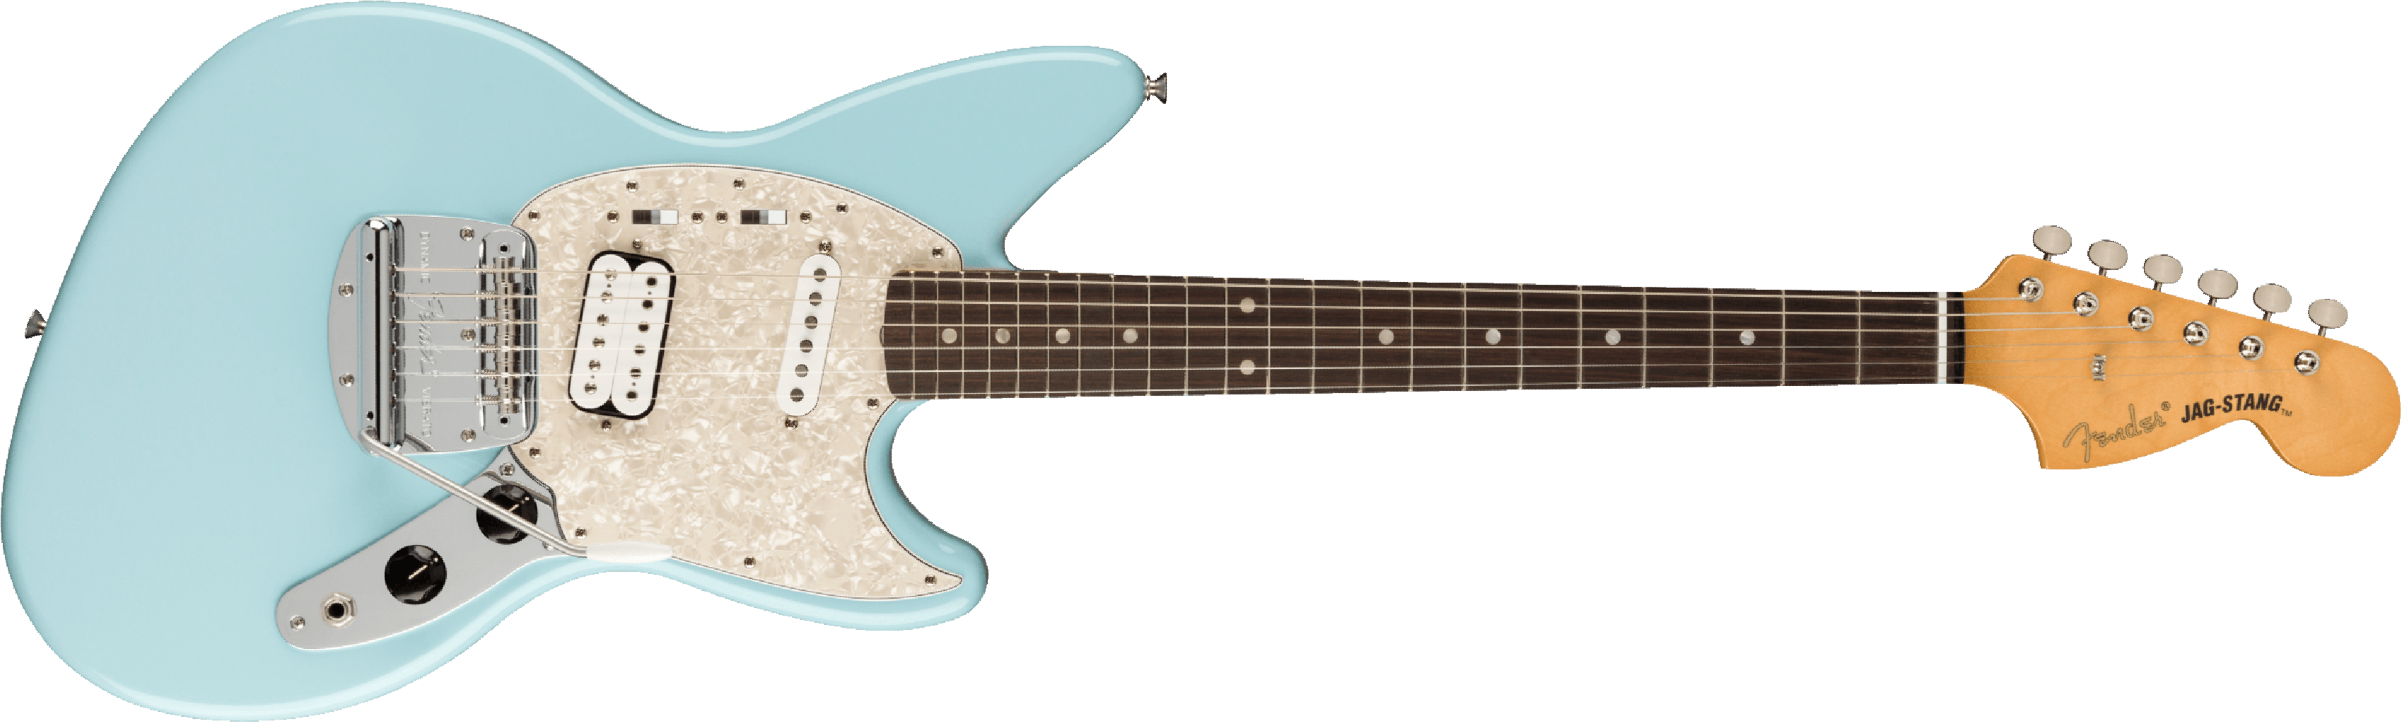 Fender Jag-stang Kurt Cobain Artist Hs Trem Rw - Sonic Blue - Retro-rock elektrische gitaar - Main picture